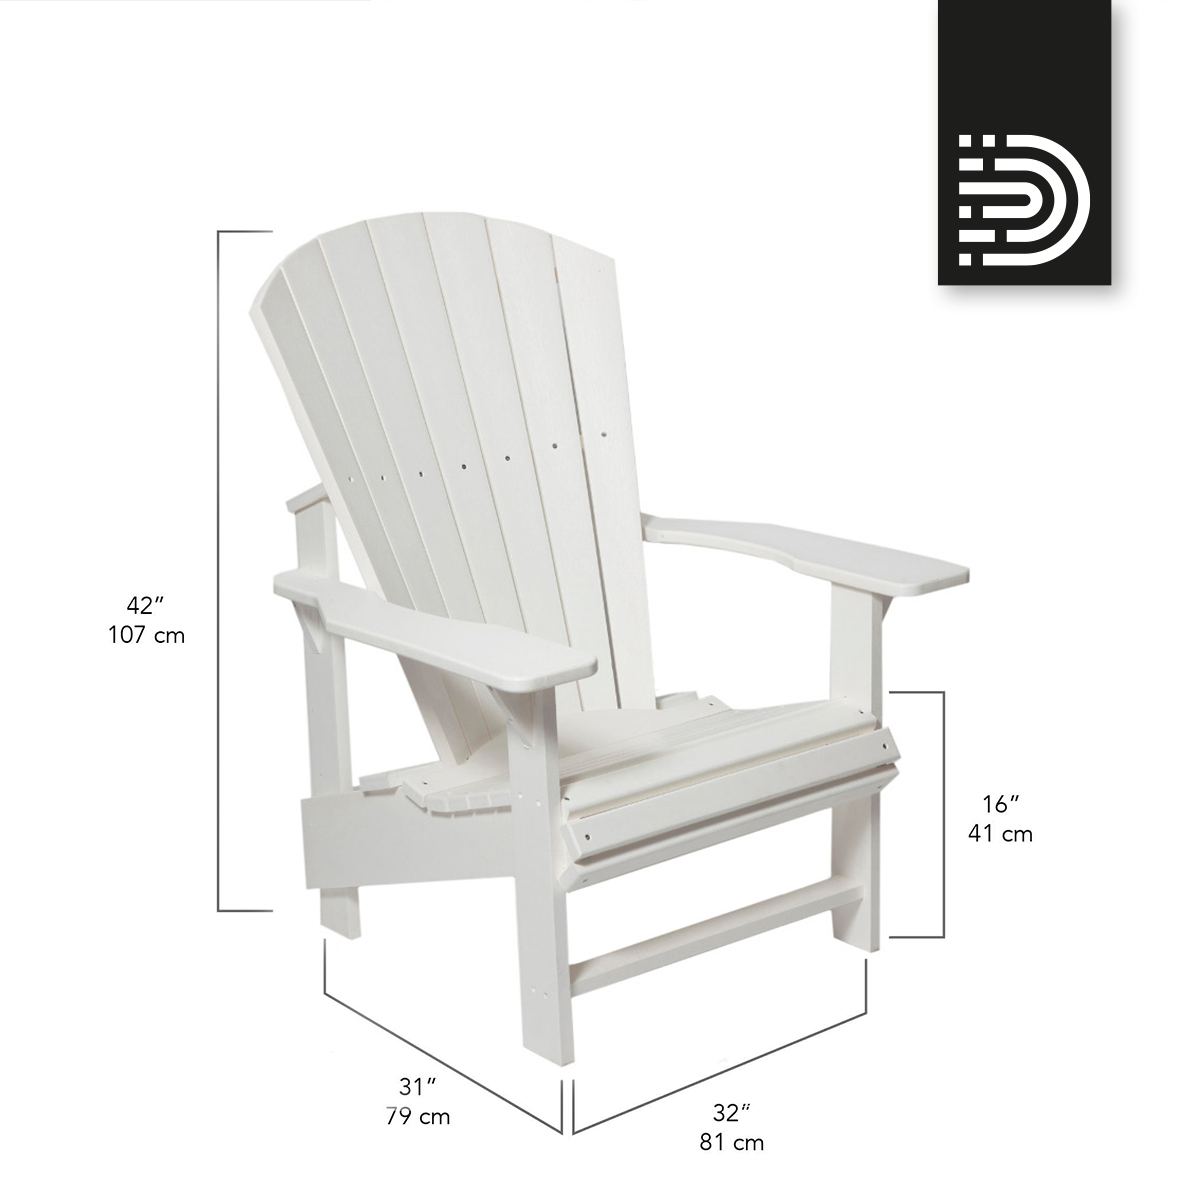 C03 Upright Adirondack Chair - white 02  2er Set